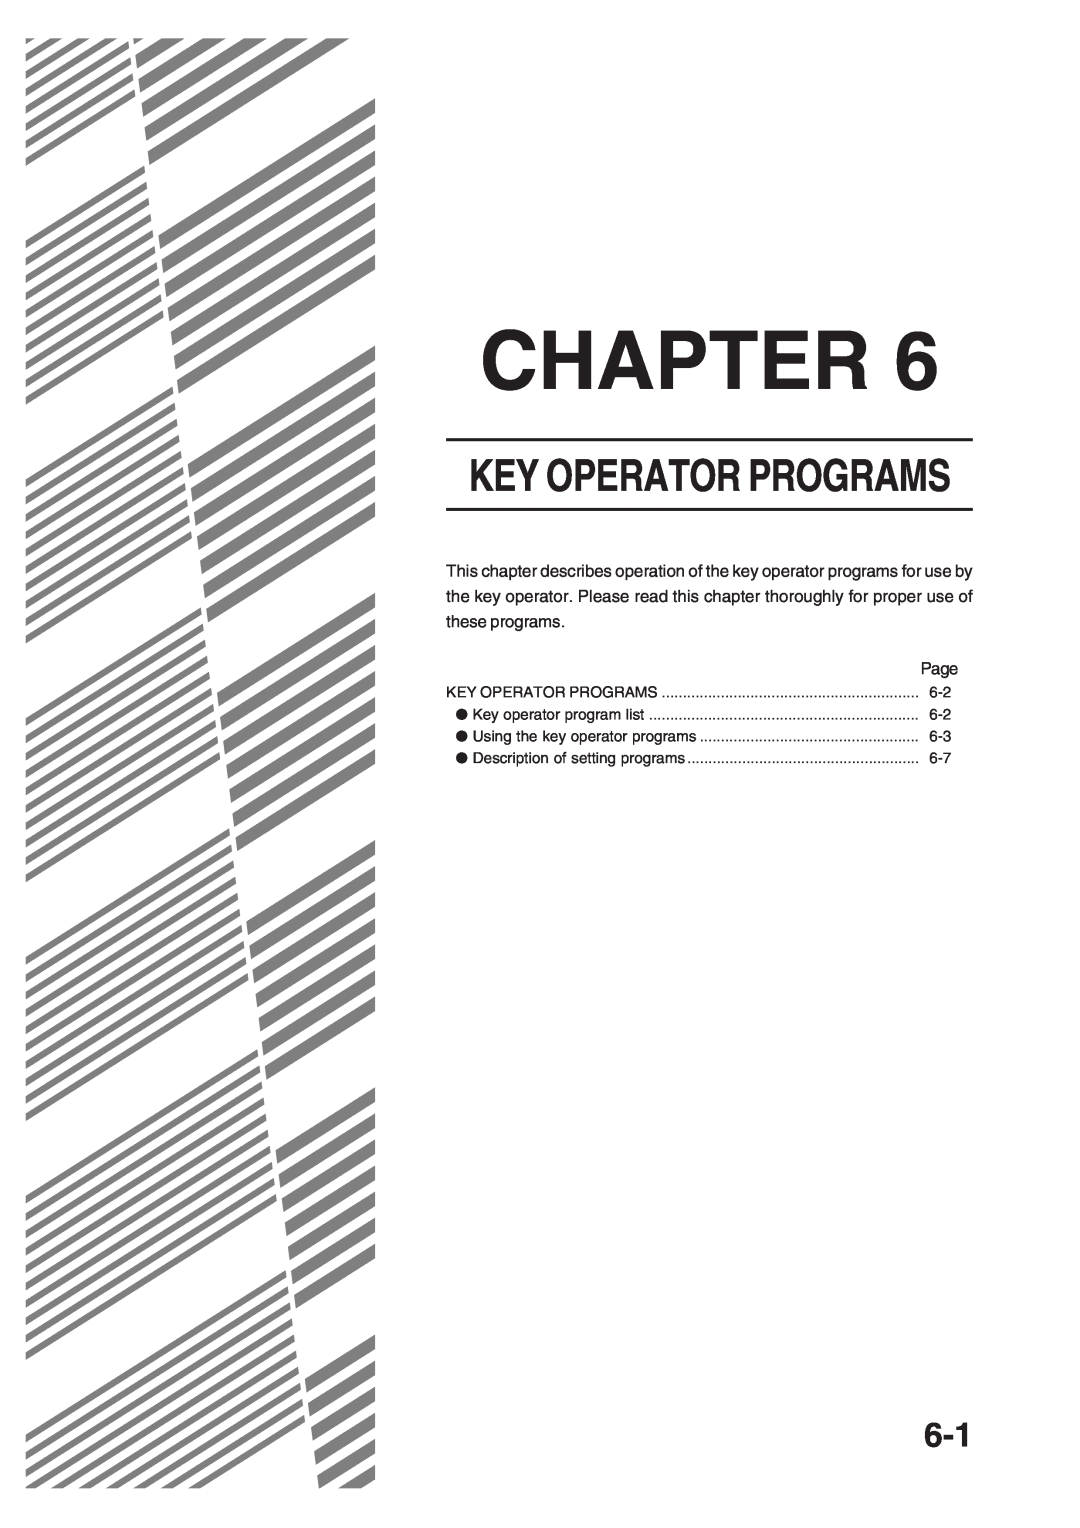 Sharp AR-350, AR_M280 operation manual Key Operator Programs, Chapter 